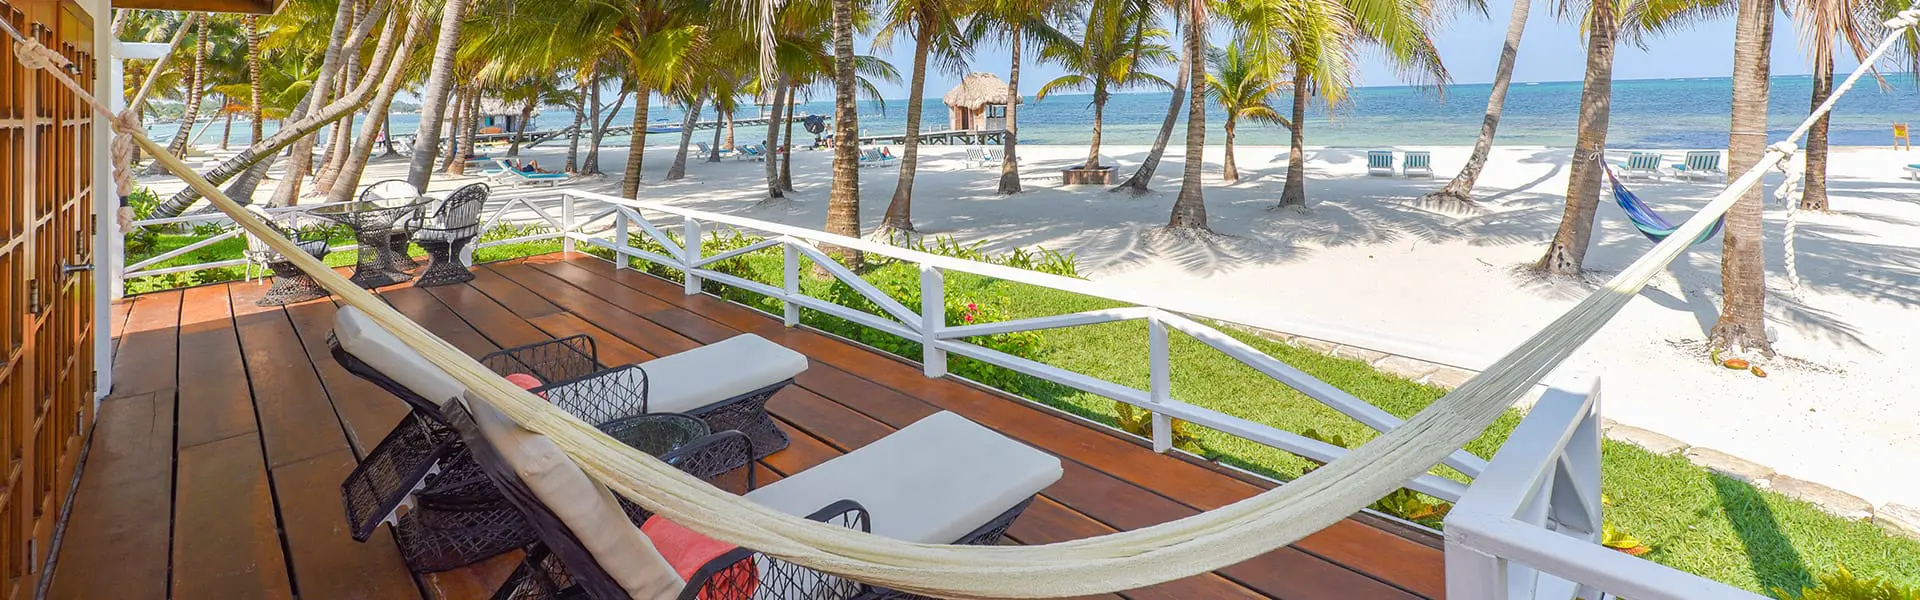 The Rainforest Suite’s private veranda at Victoria House Resort and Spa, Belize.